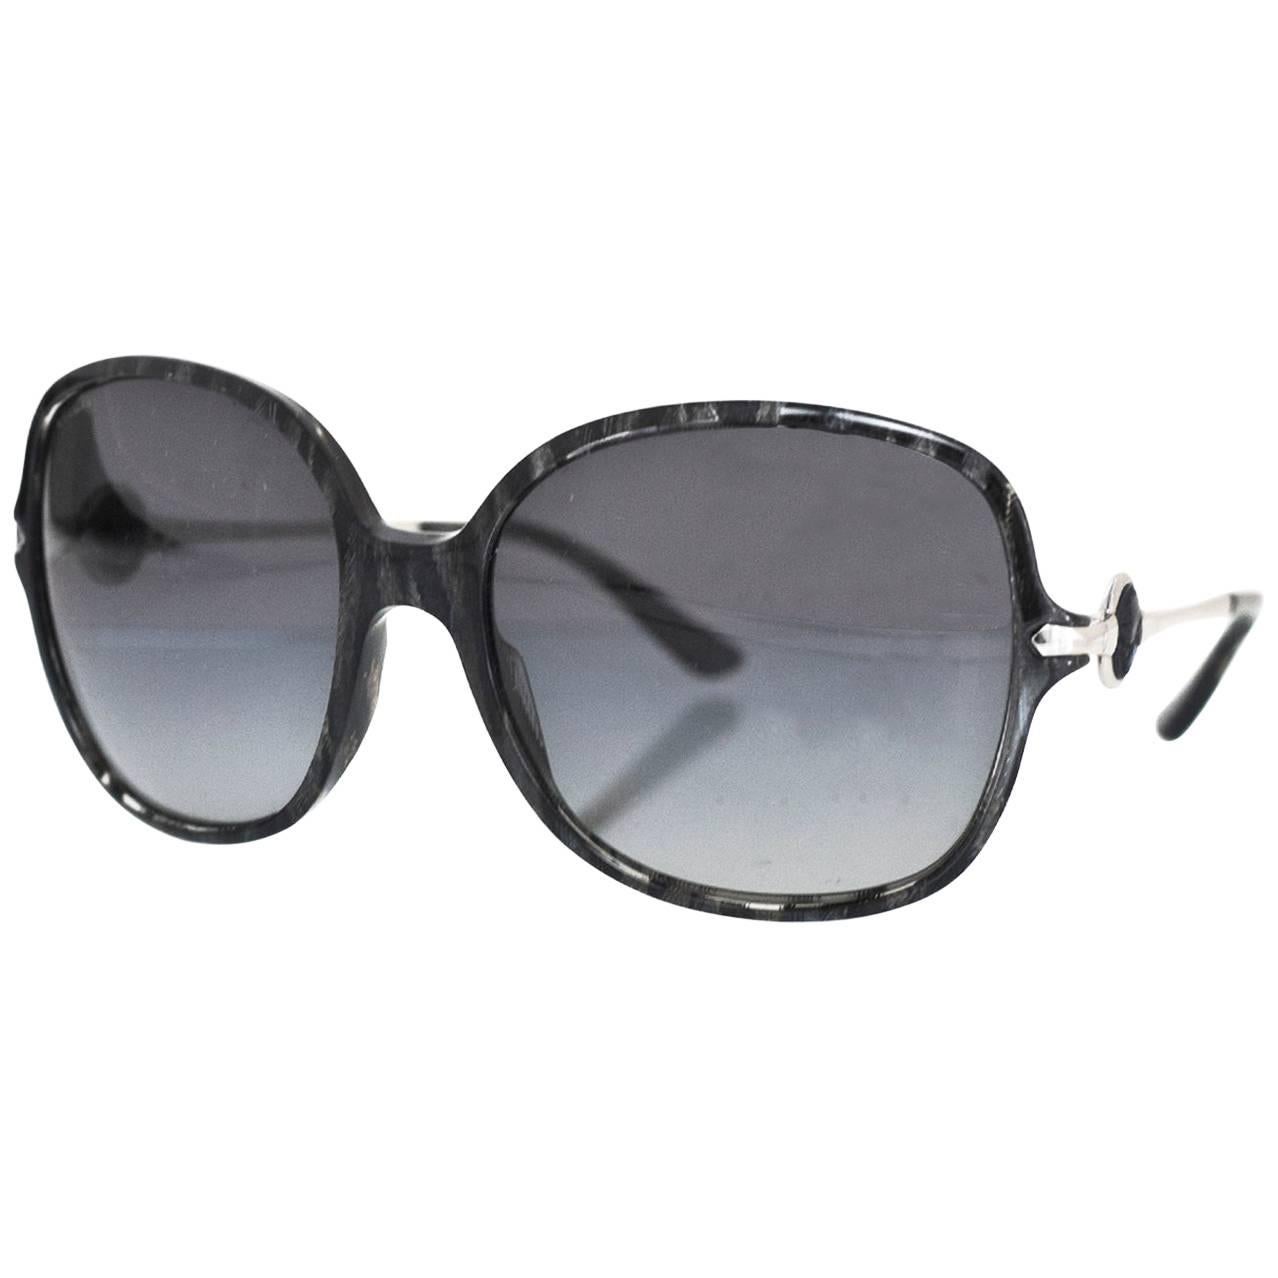 Bvlgari 8087 5155/T3 Black Tortoise Sunglasses with Box and Case